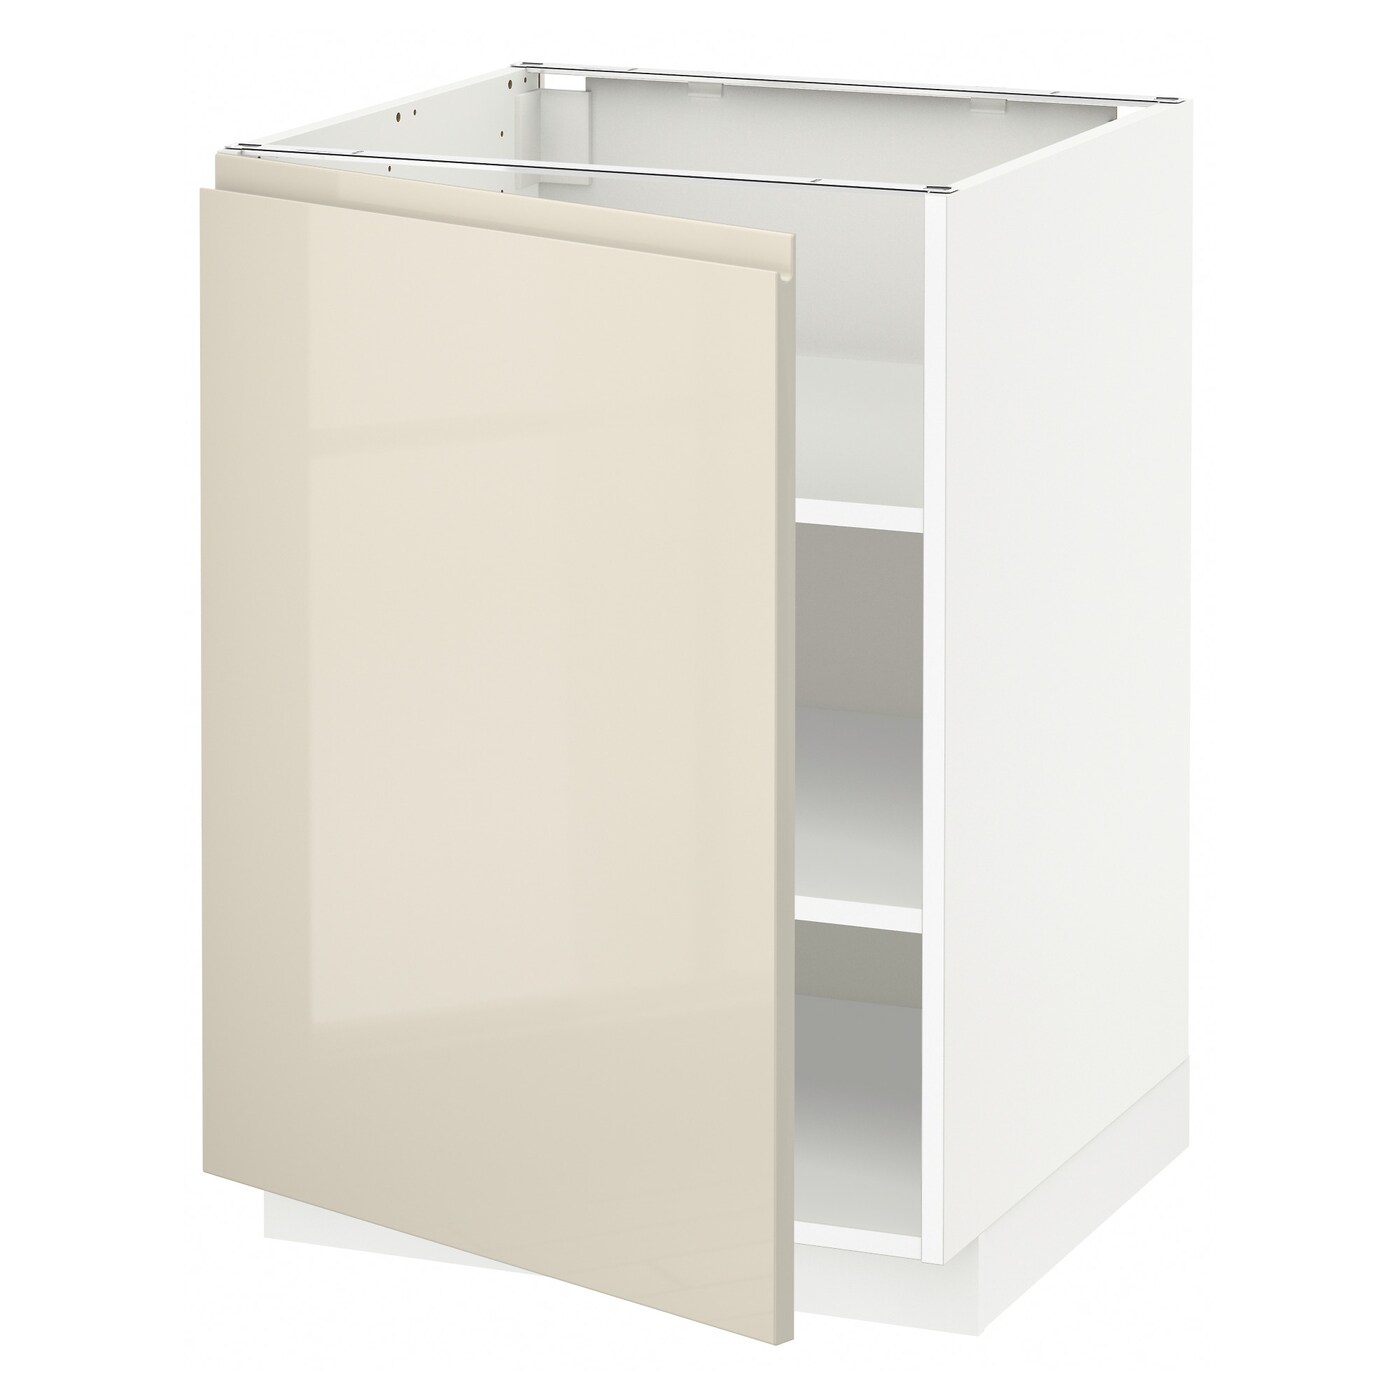 Напольный шкаф - METOD IKEA/ МЕТОД ИКЕА,  88х60 см, белый/бежевый